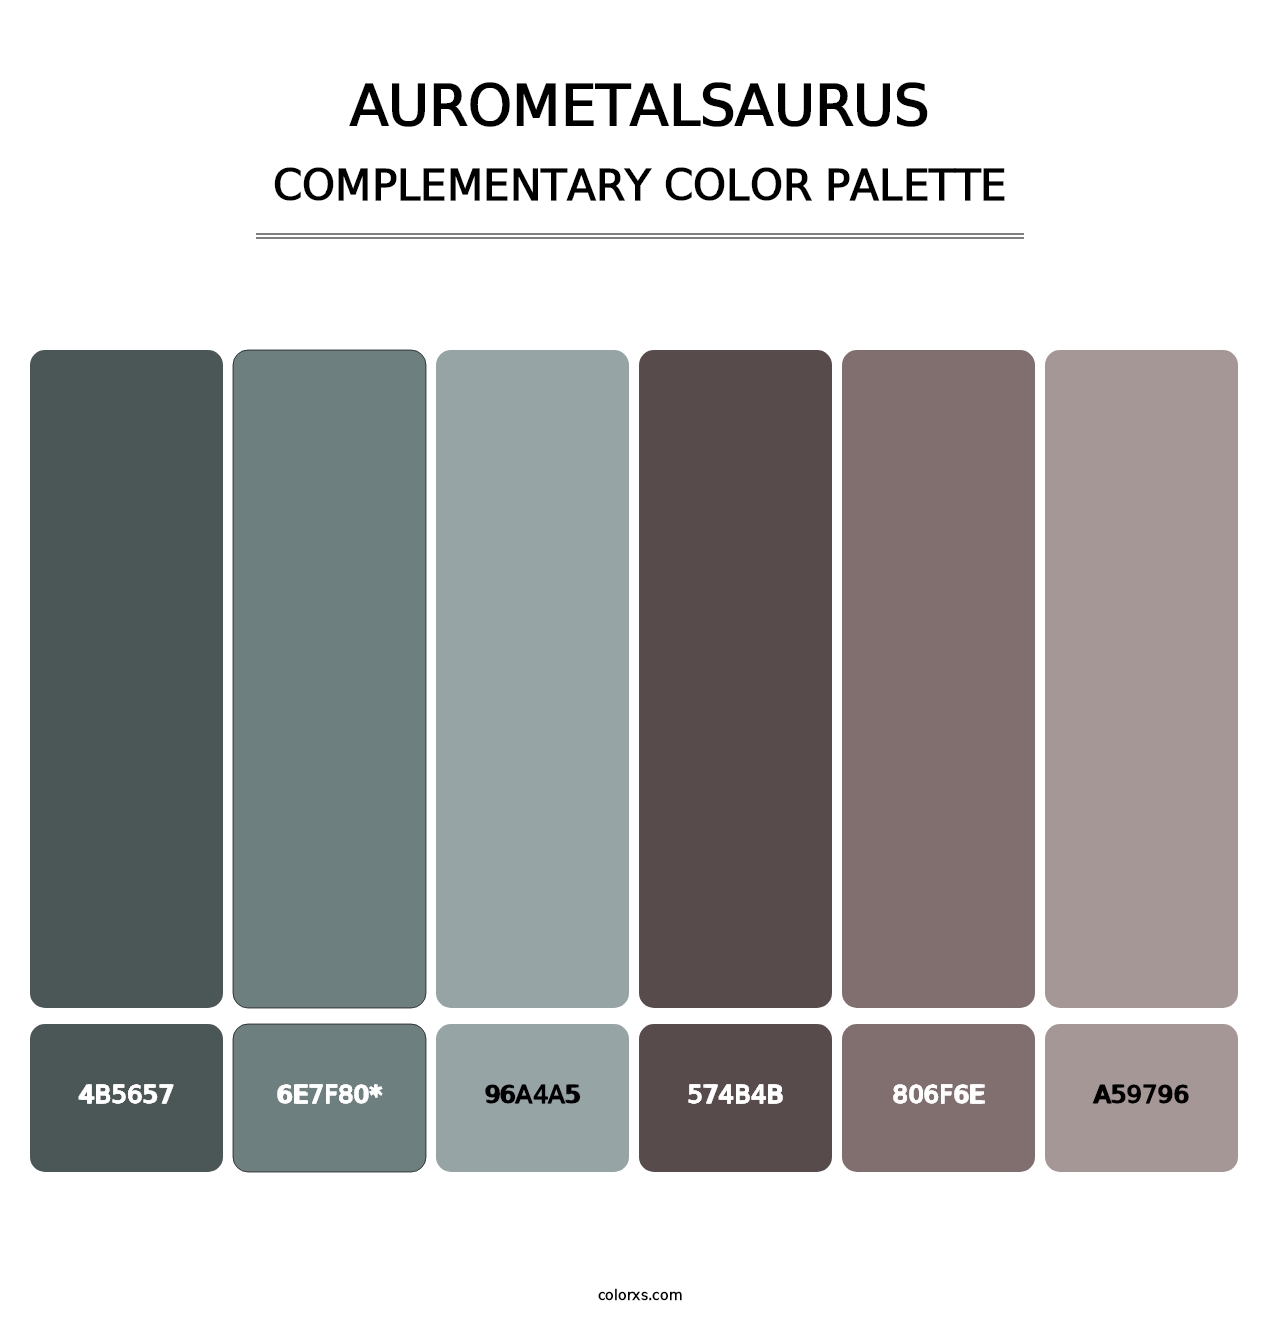 AuroMetalSaurus - Complementary Color Palette